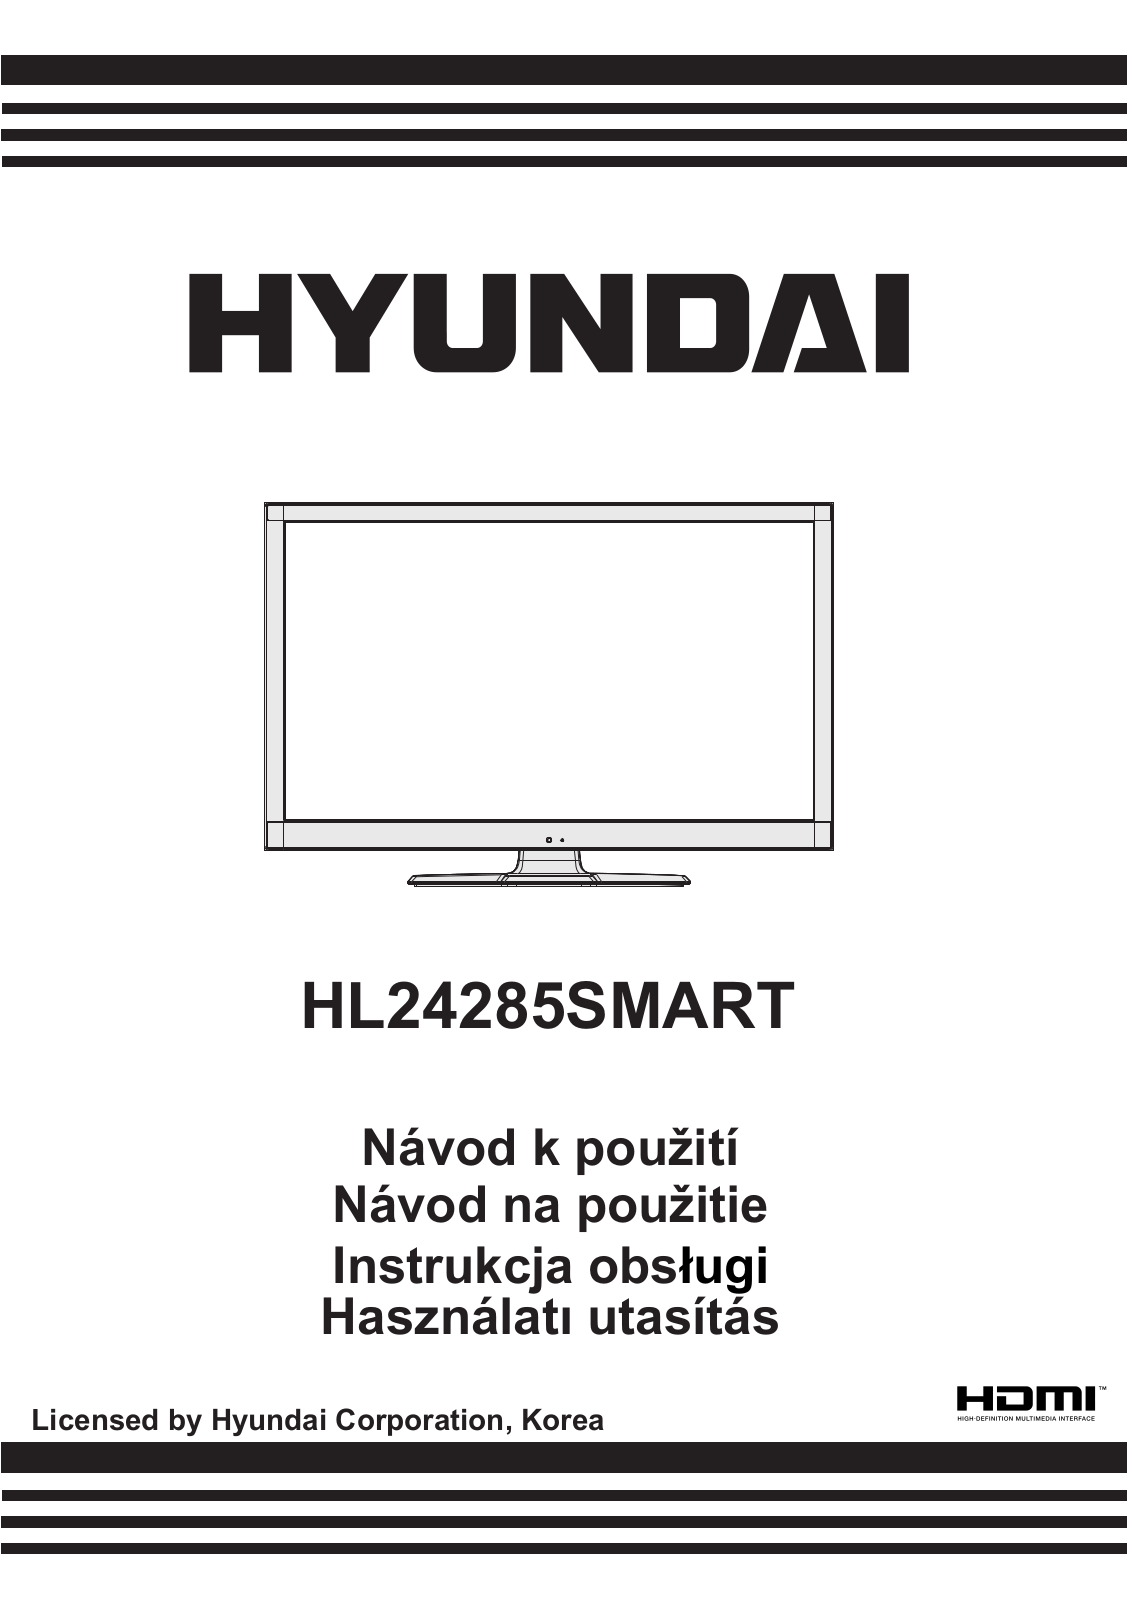 Hyundai HL 24285 SMART Manual